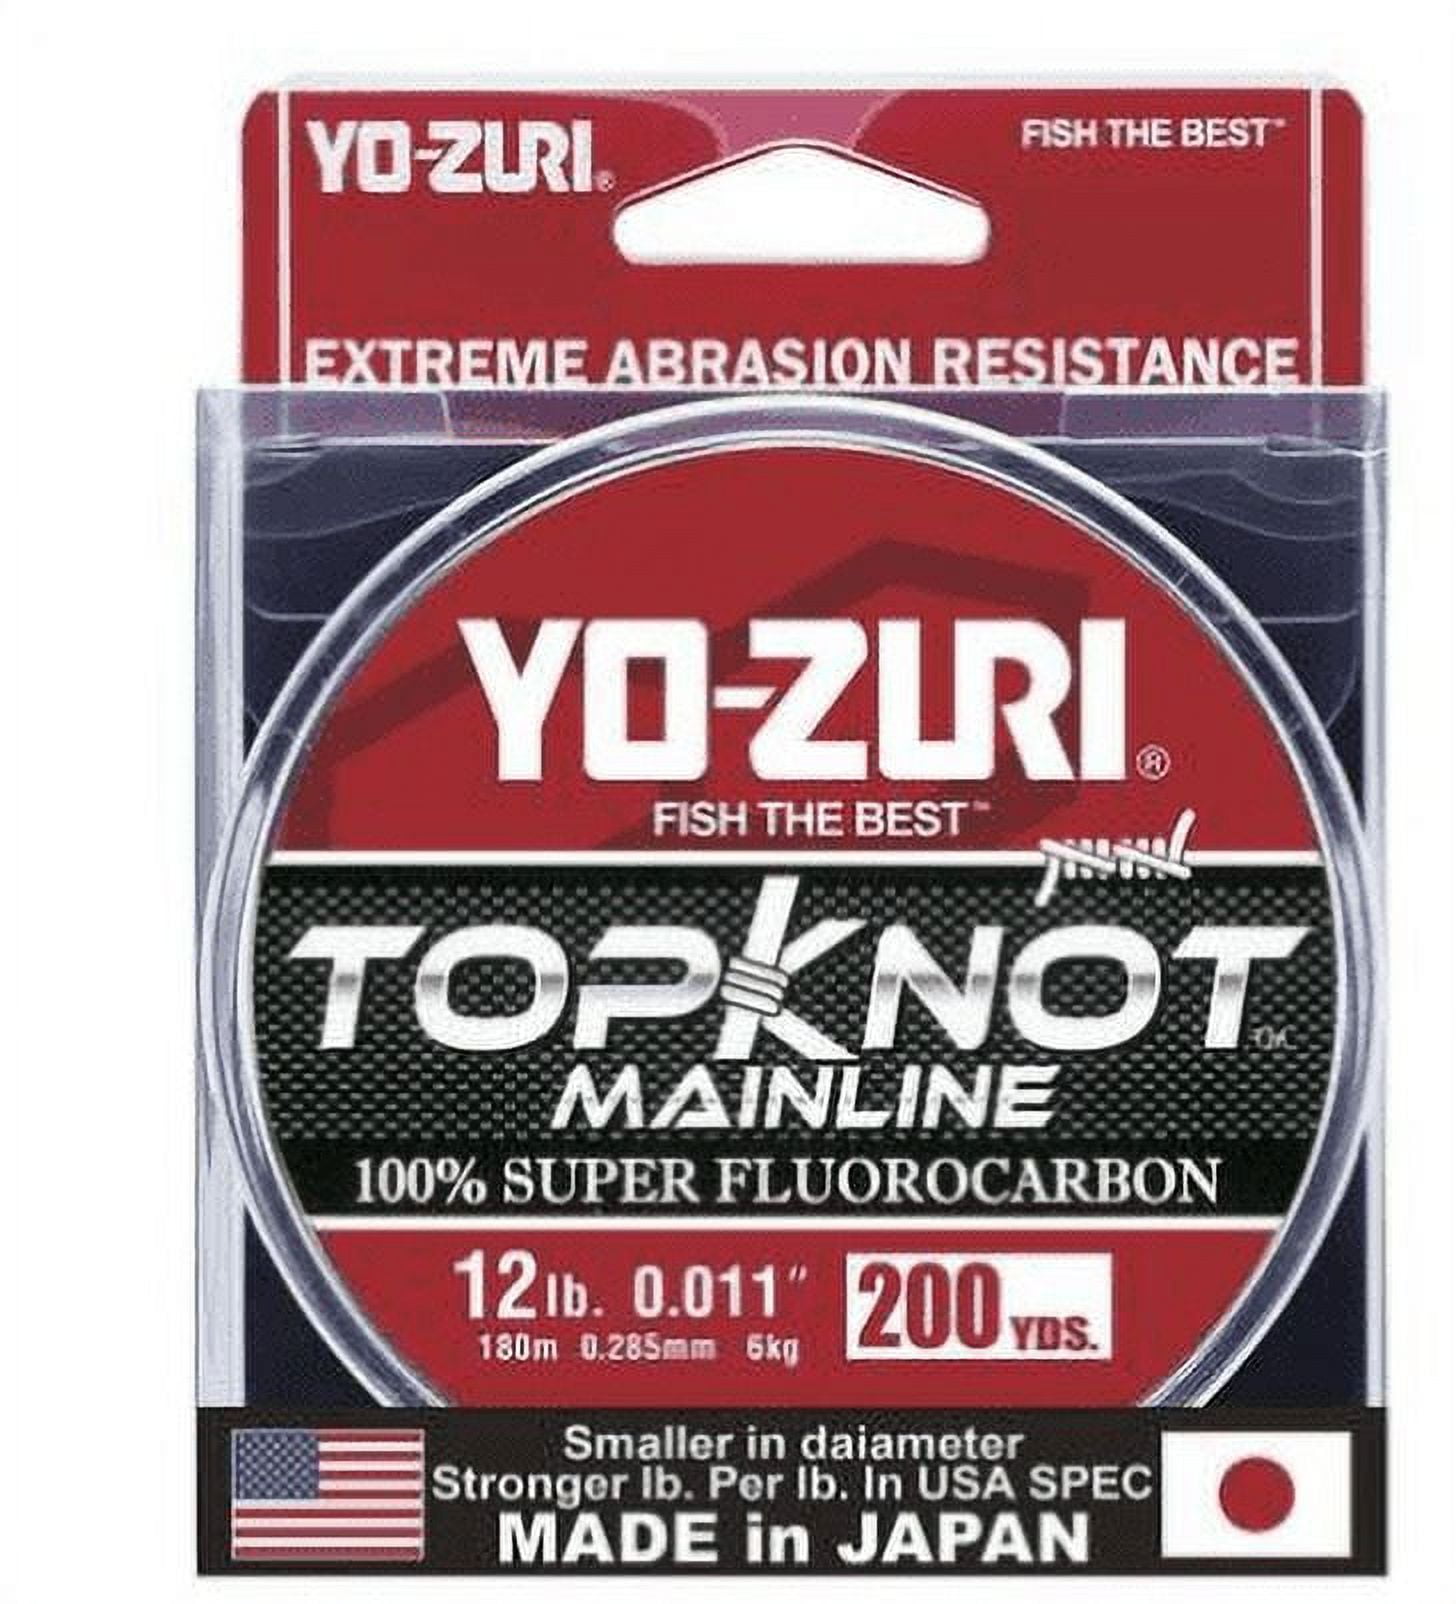 Yo-Zuri Topknot 100% Fluorocarbon Fishing Line 12lb 200yd 